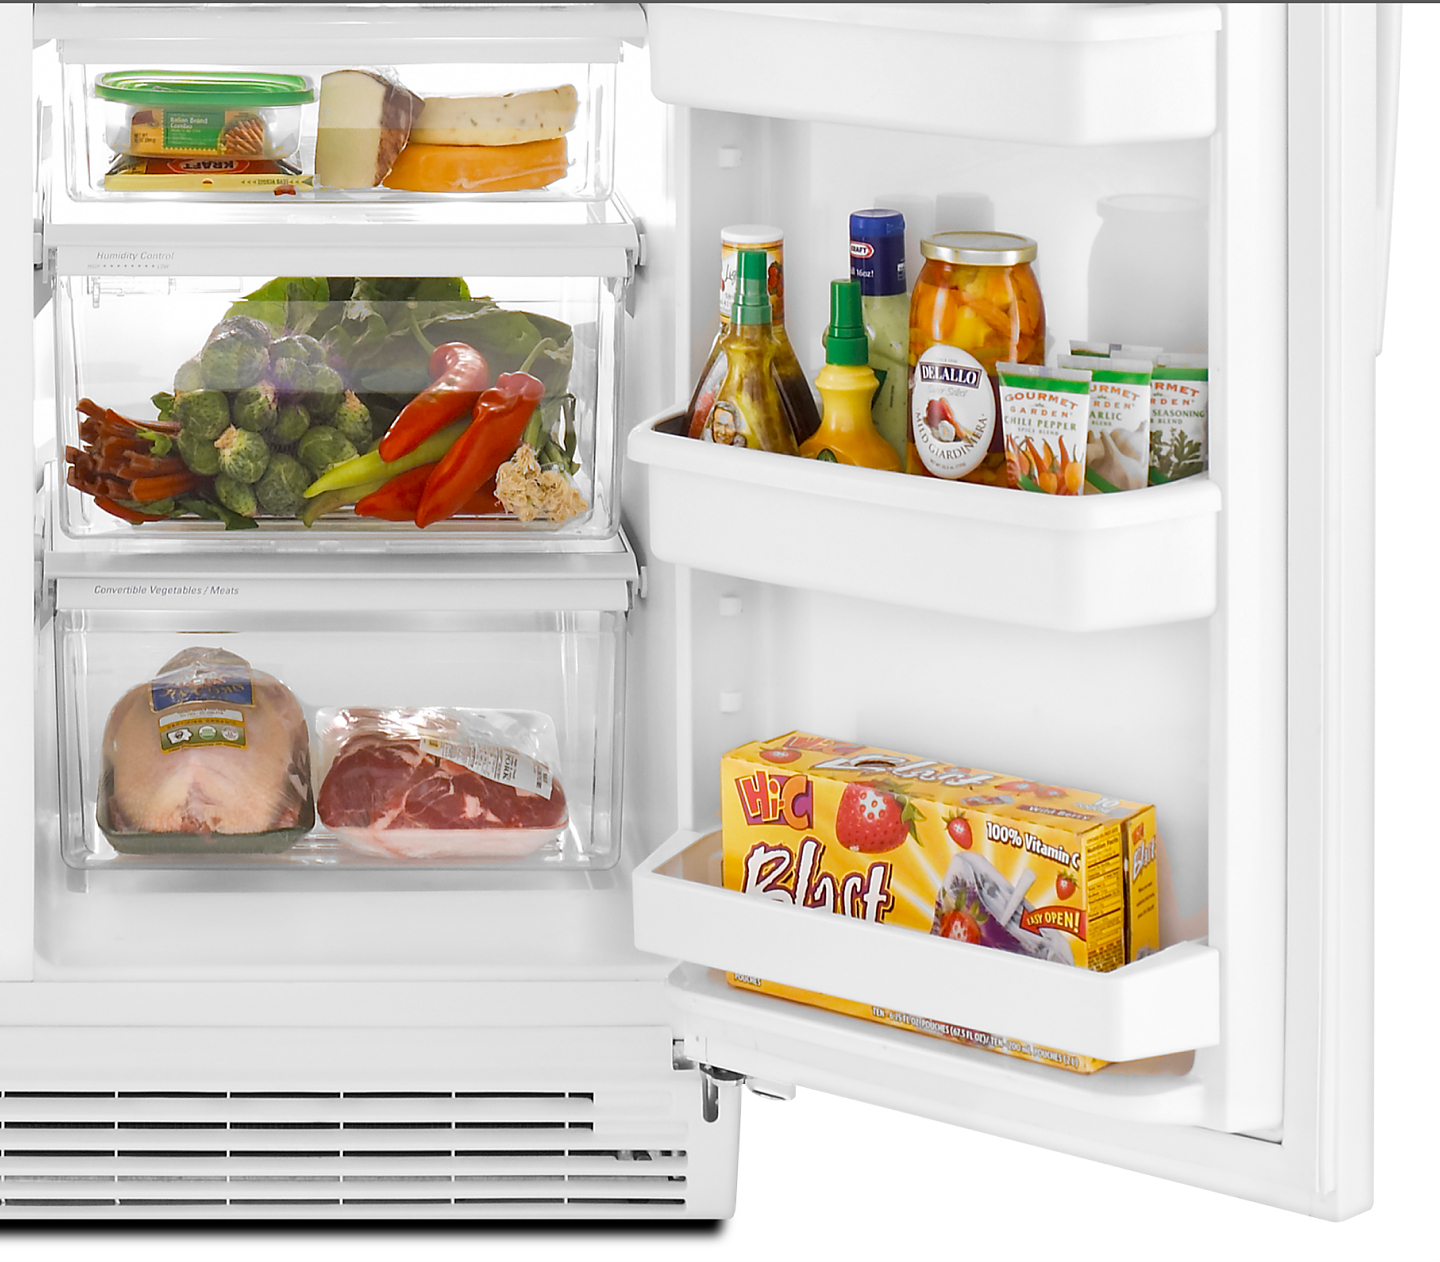 How to Organize Your Refrigerator